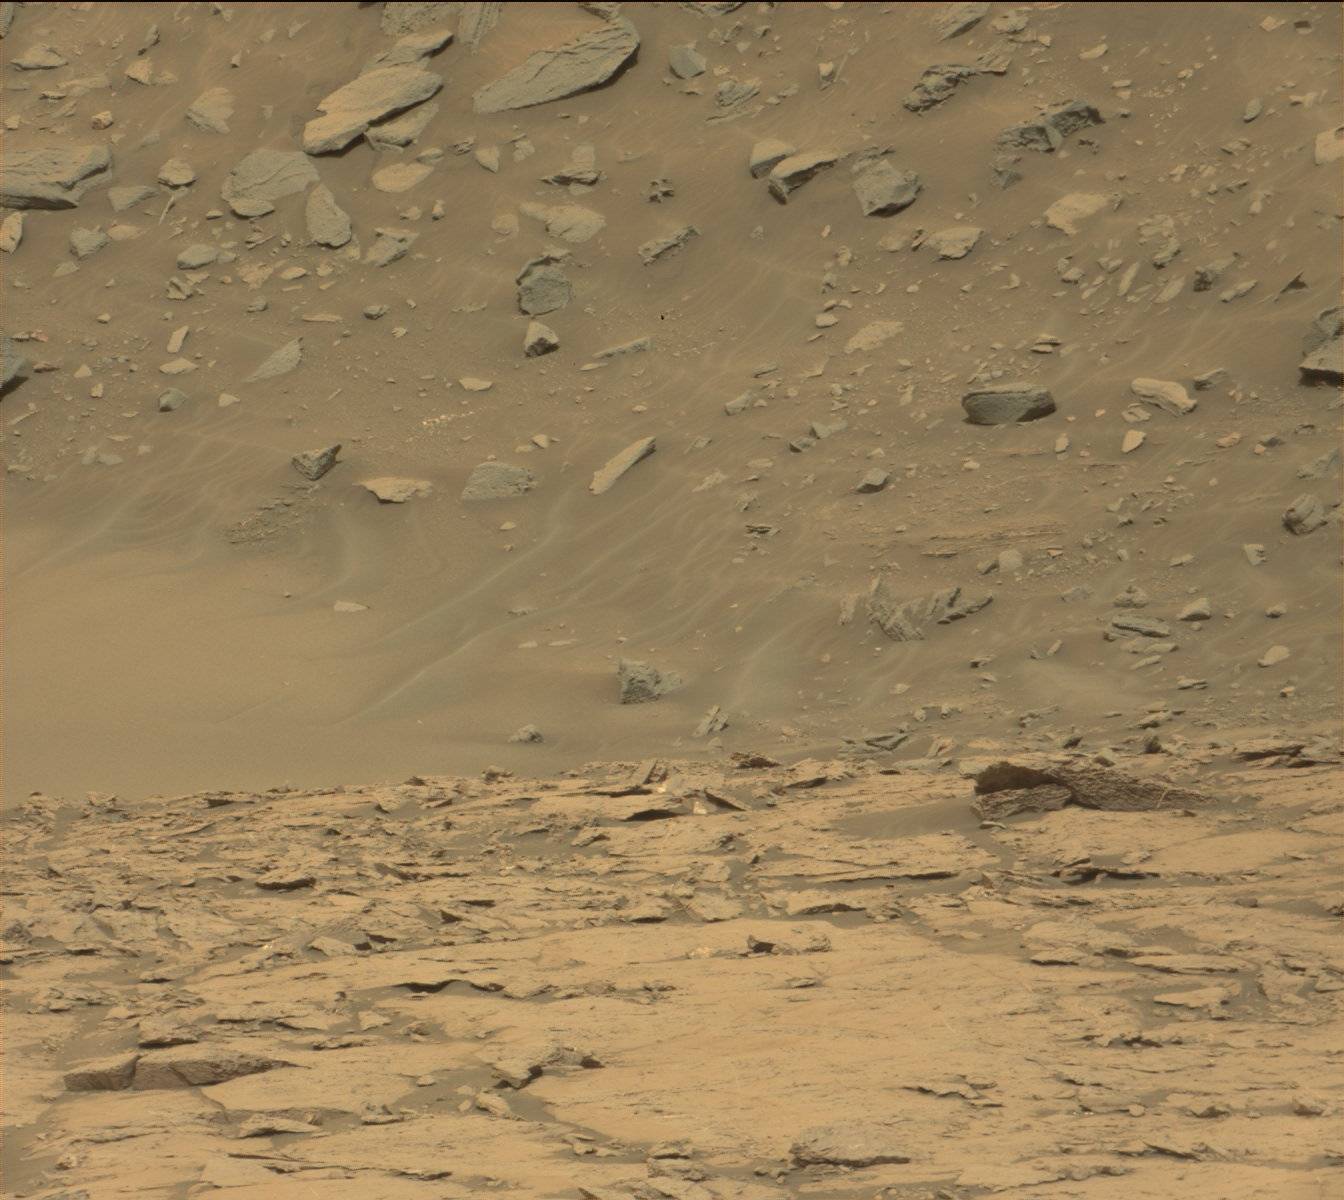 Mars rover curiosity image from MAST camera